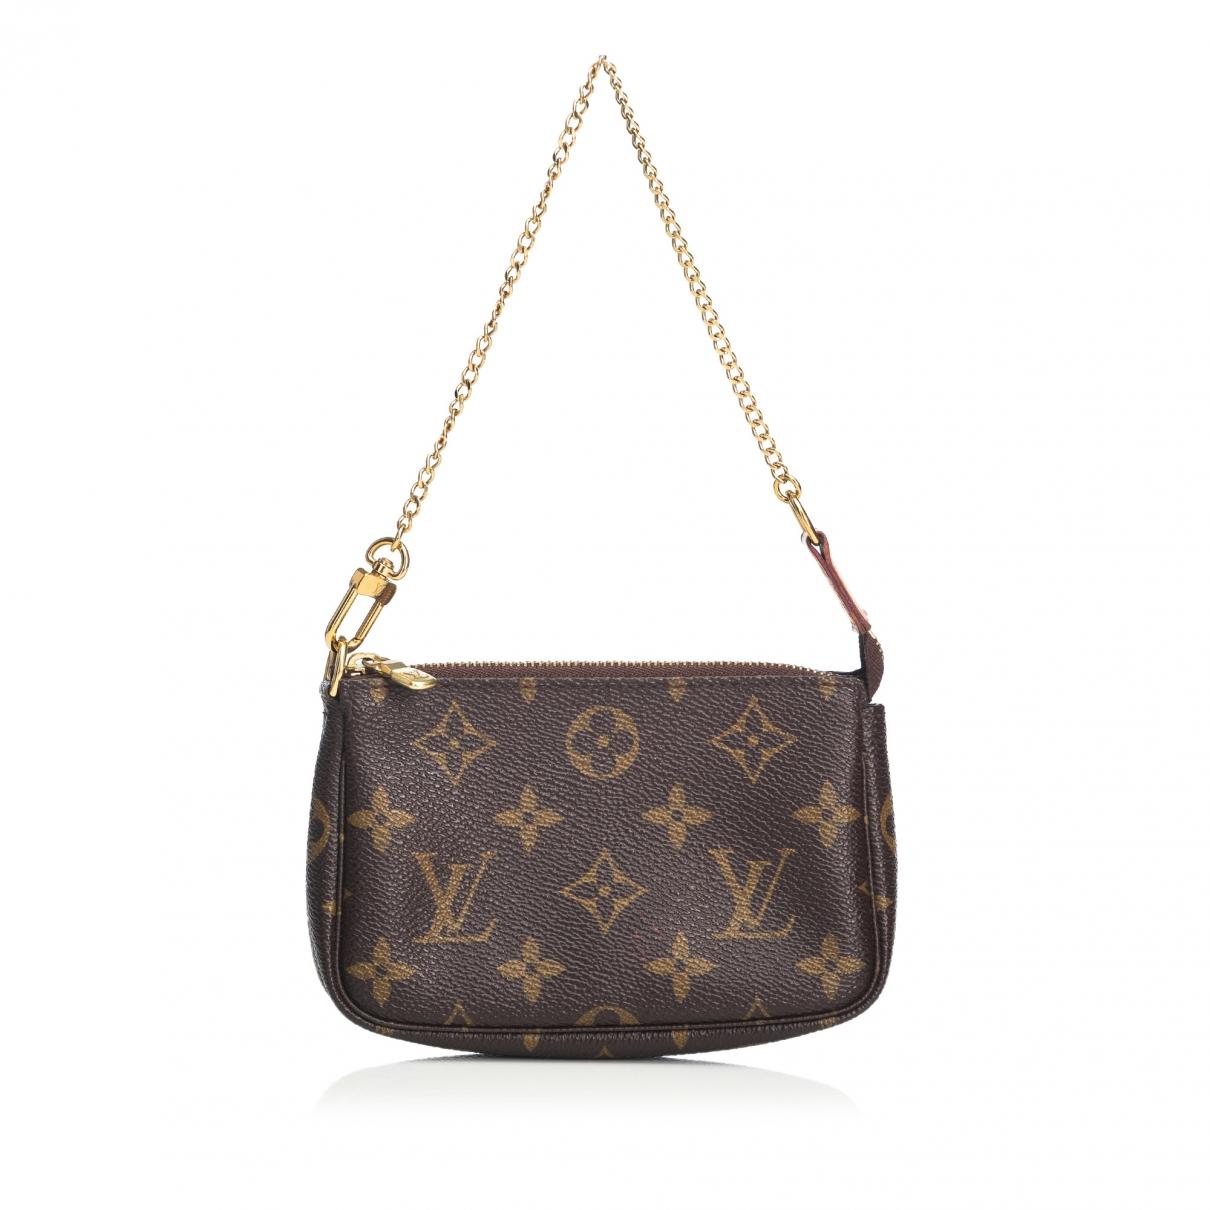 Louis Vuitton Pochette Accessoire Cloth Clutch Bag in Brown - Lyst